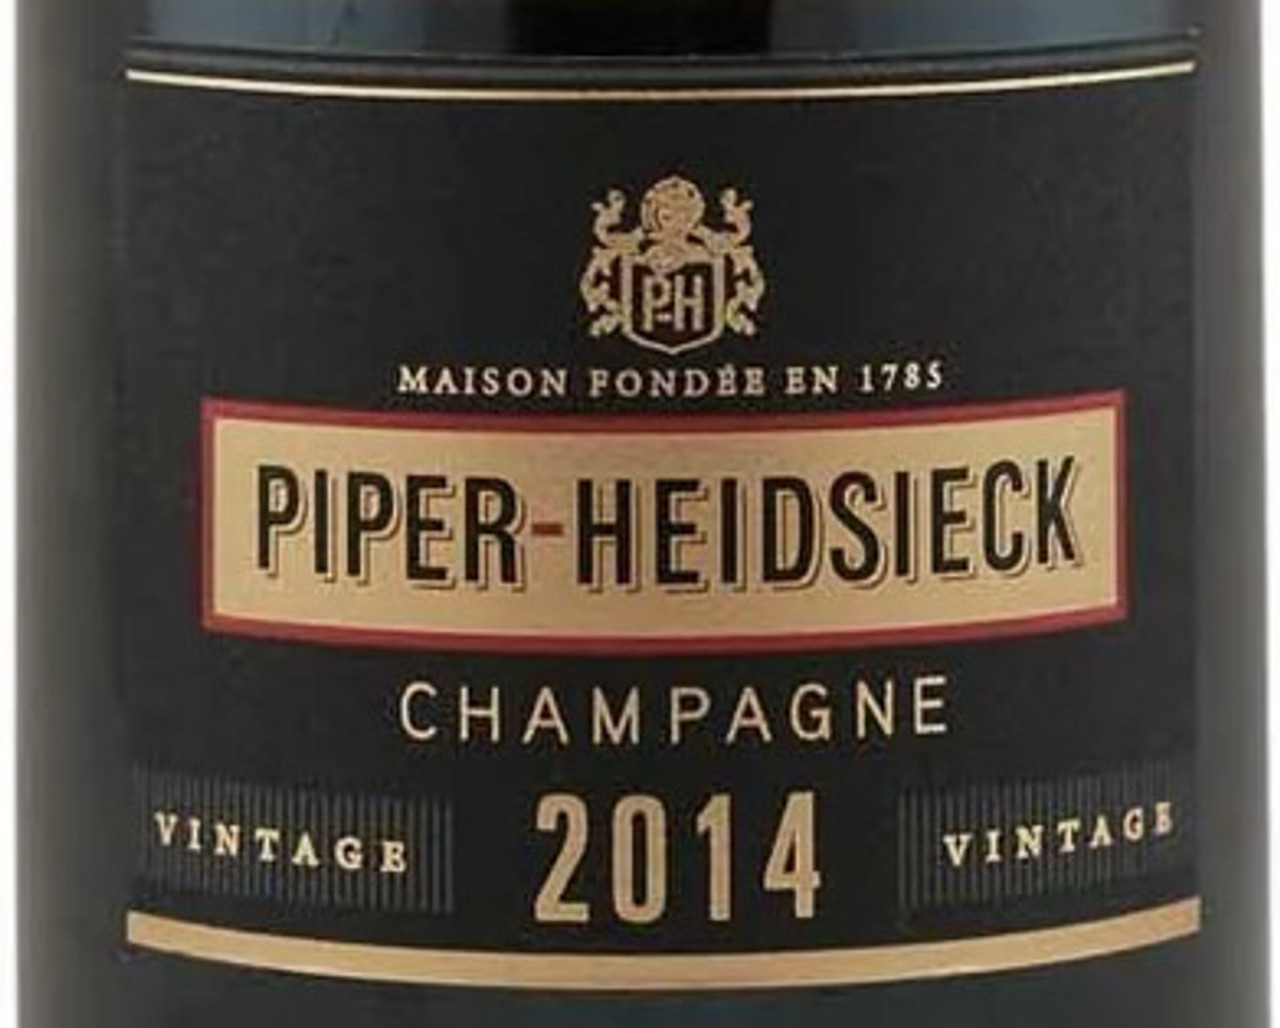 Hills Champagne Company Piper-Heidsieck Woodland - Brut Wine 2014